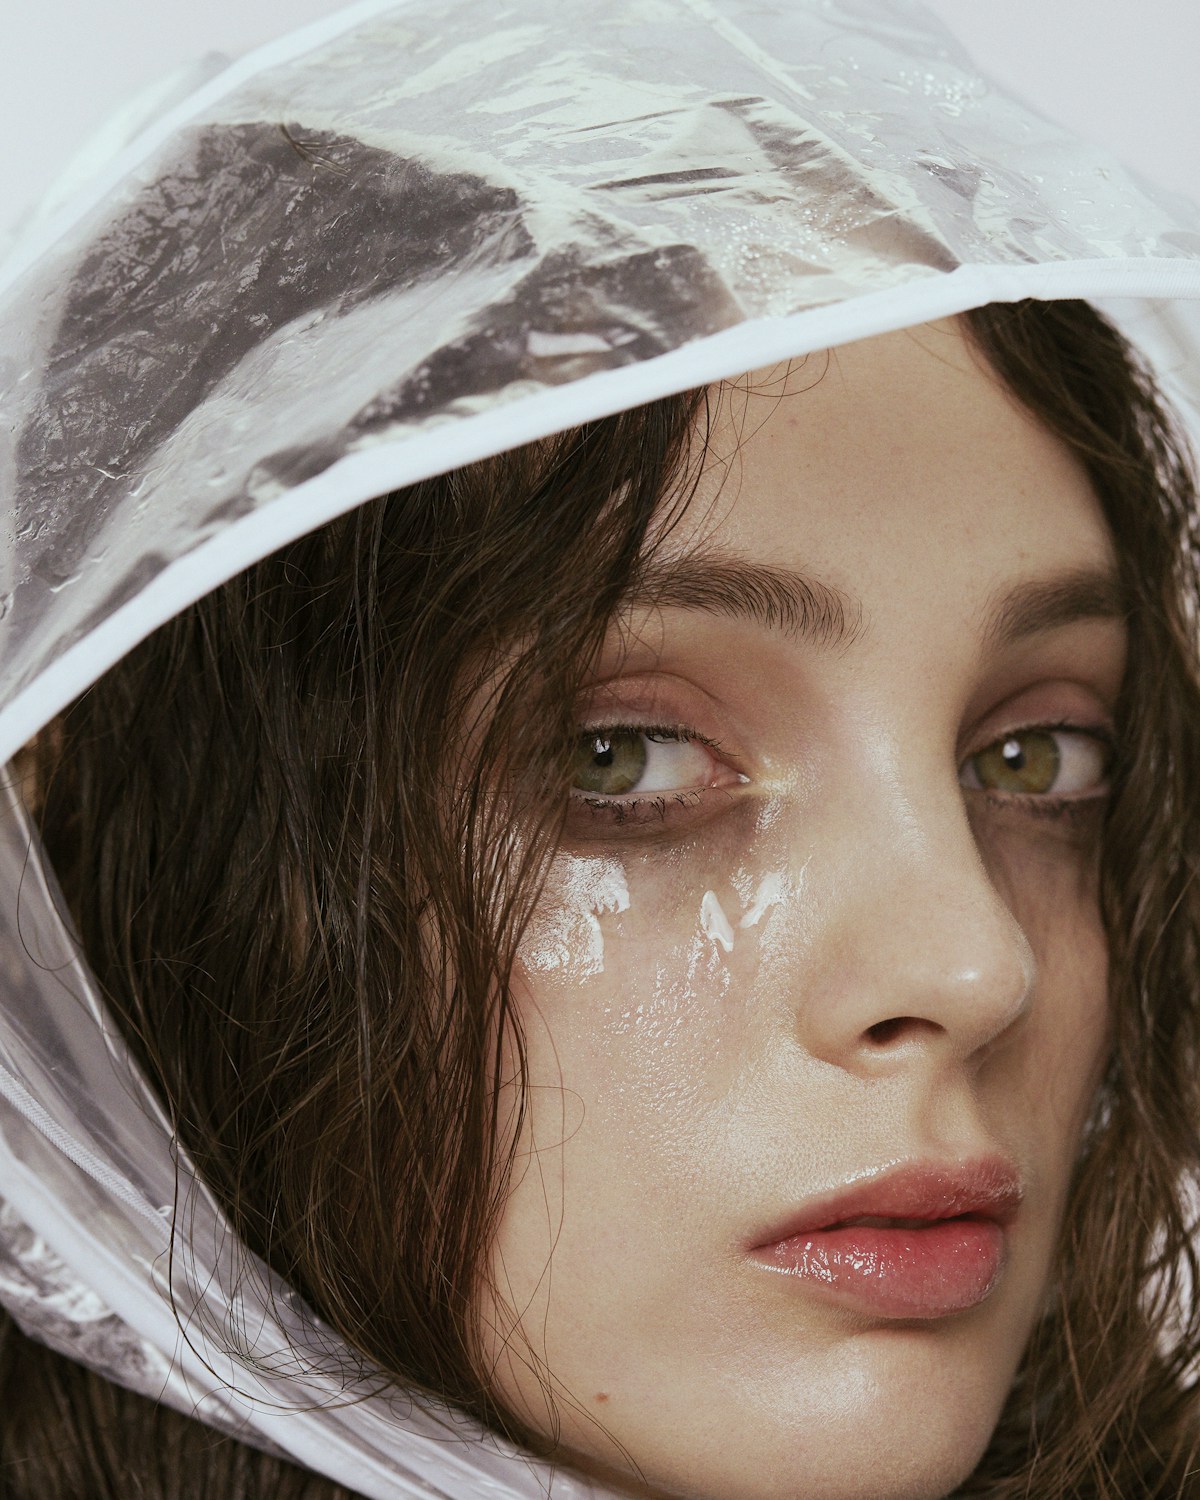 A woman wearing a clear plastic rain hood. Her eyes look watery